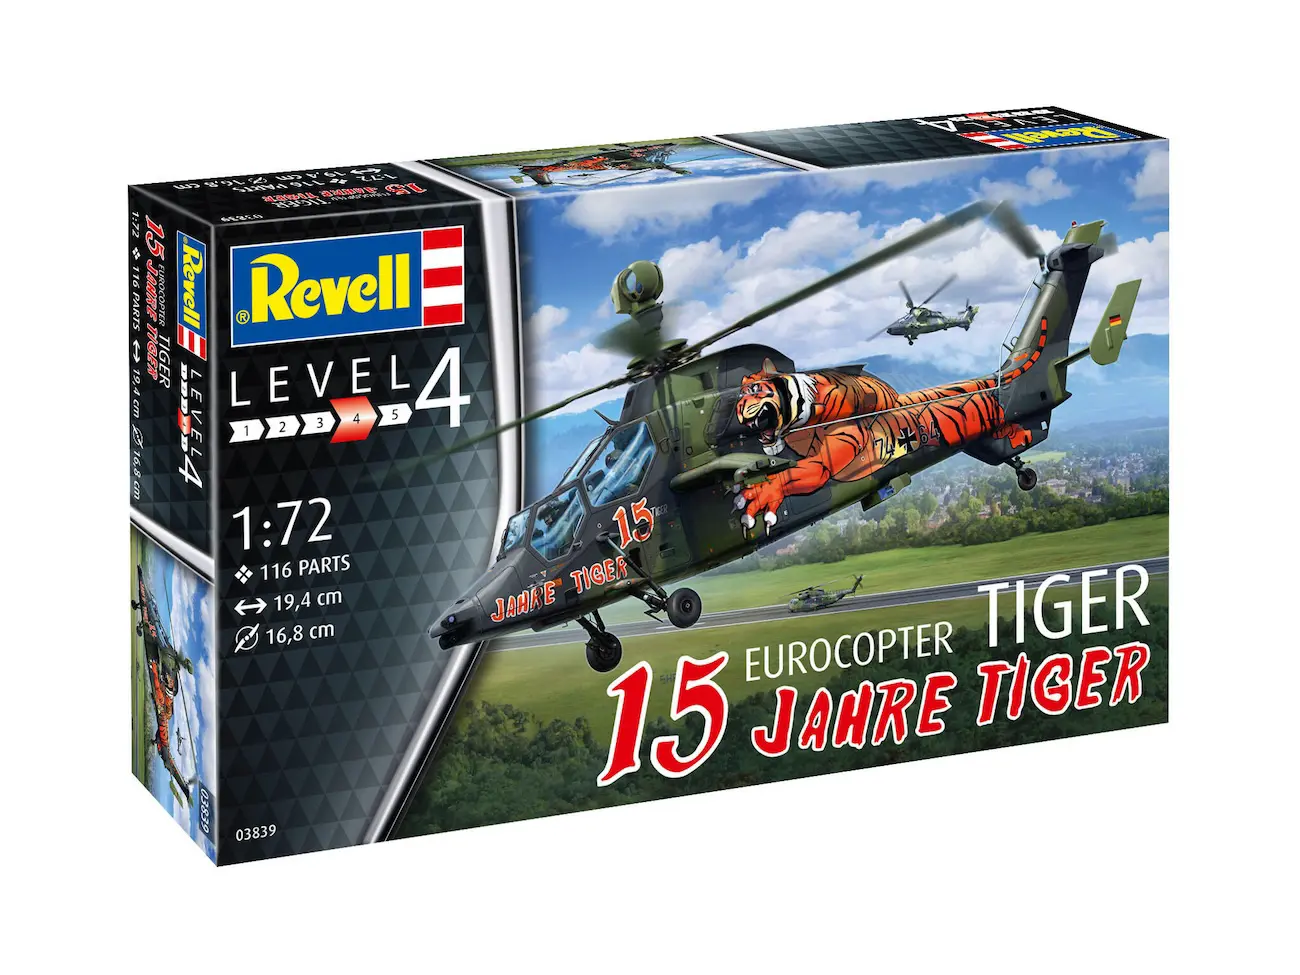 Revell 03839 - Eurocopter Tiger 15 Jahre Tiger